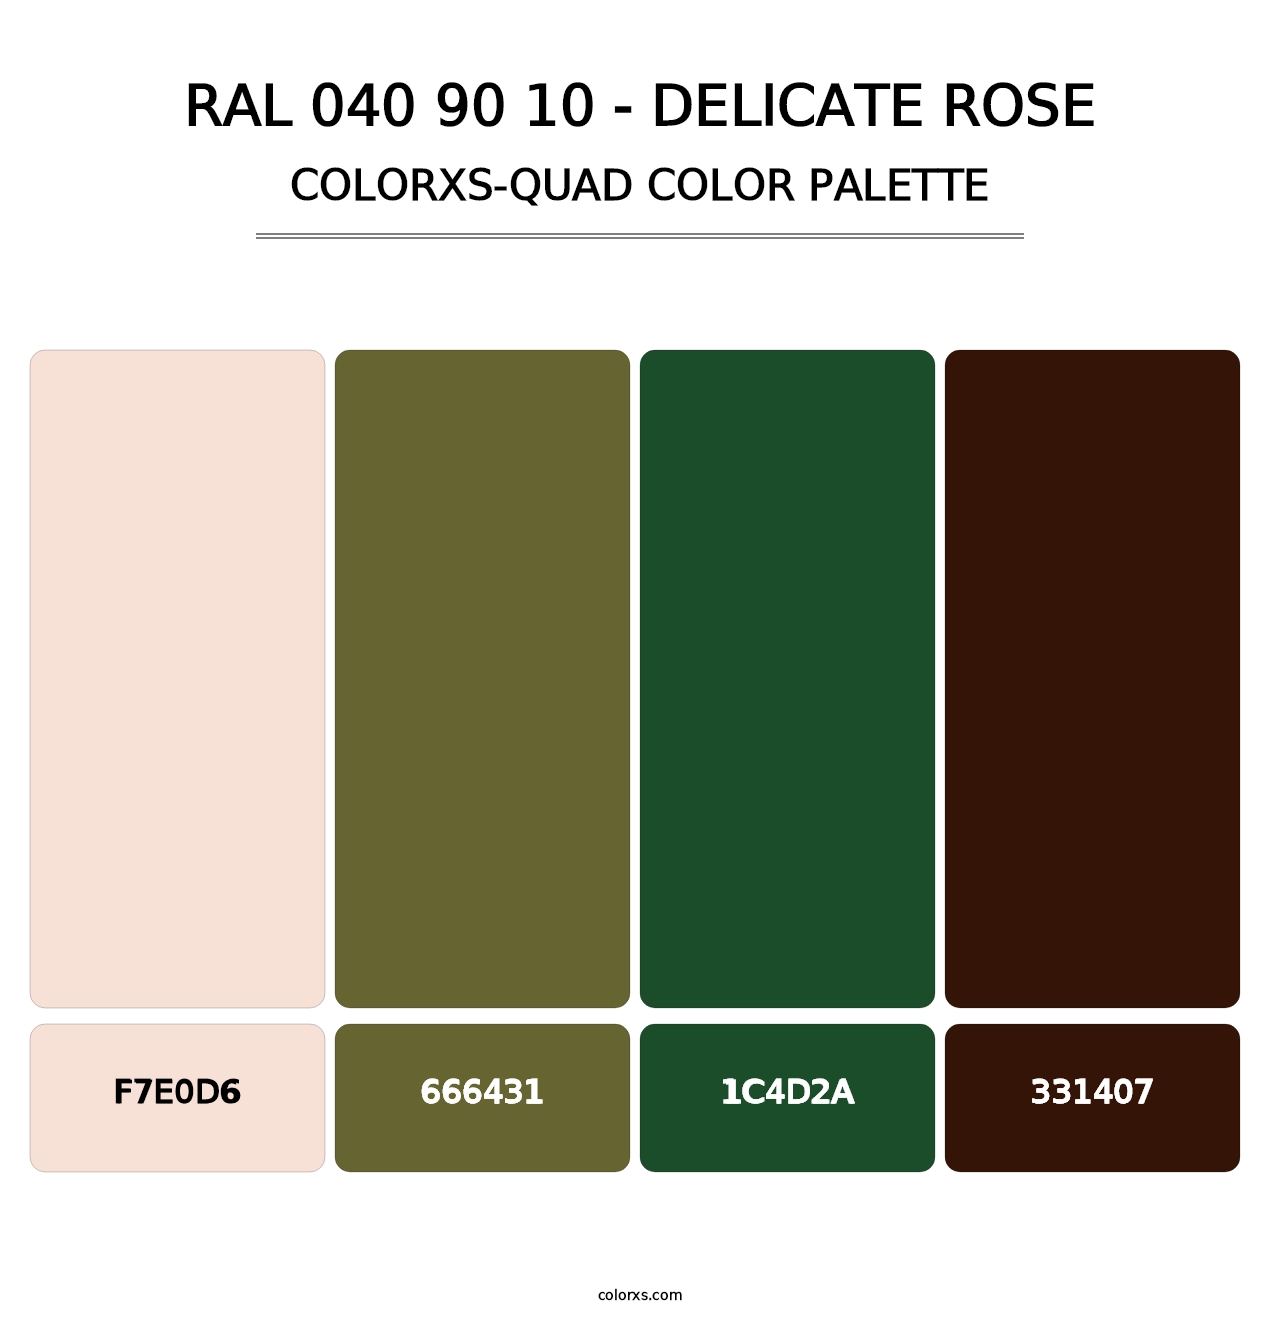 RAL 040 90 10 - Delicate Rose - Colorxs Quad Palette